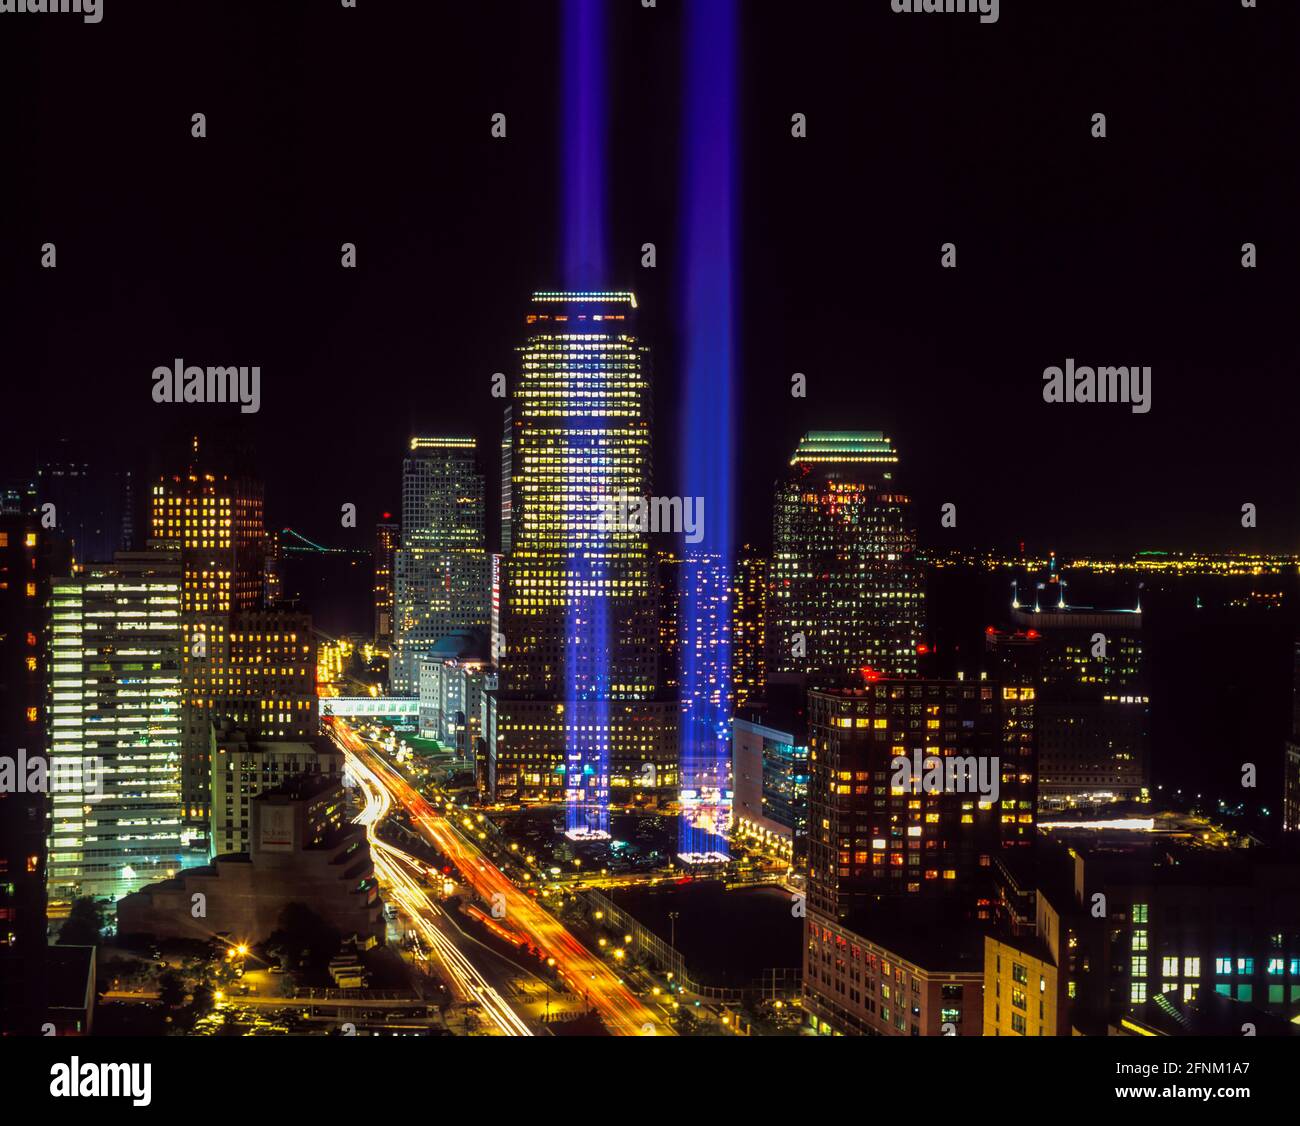 2004 STORICO SETTEMBRE 11 WORLD TRADE CENTER TWIN TOWERS LIGHT MEMORIAL DOWNTOWN MANHATTAN NEW YORK CITY USA Foto Stock